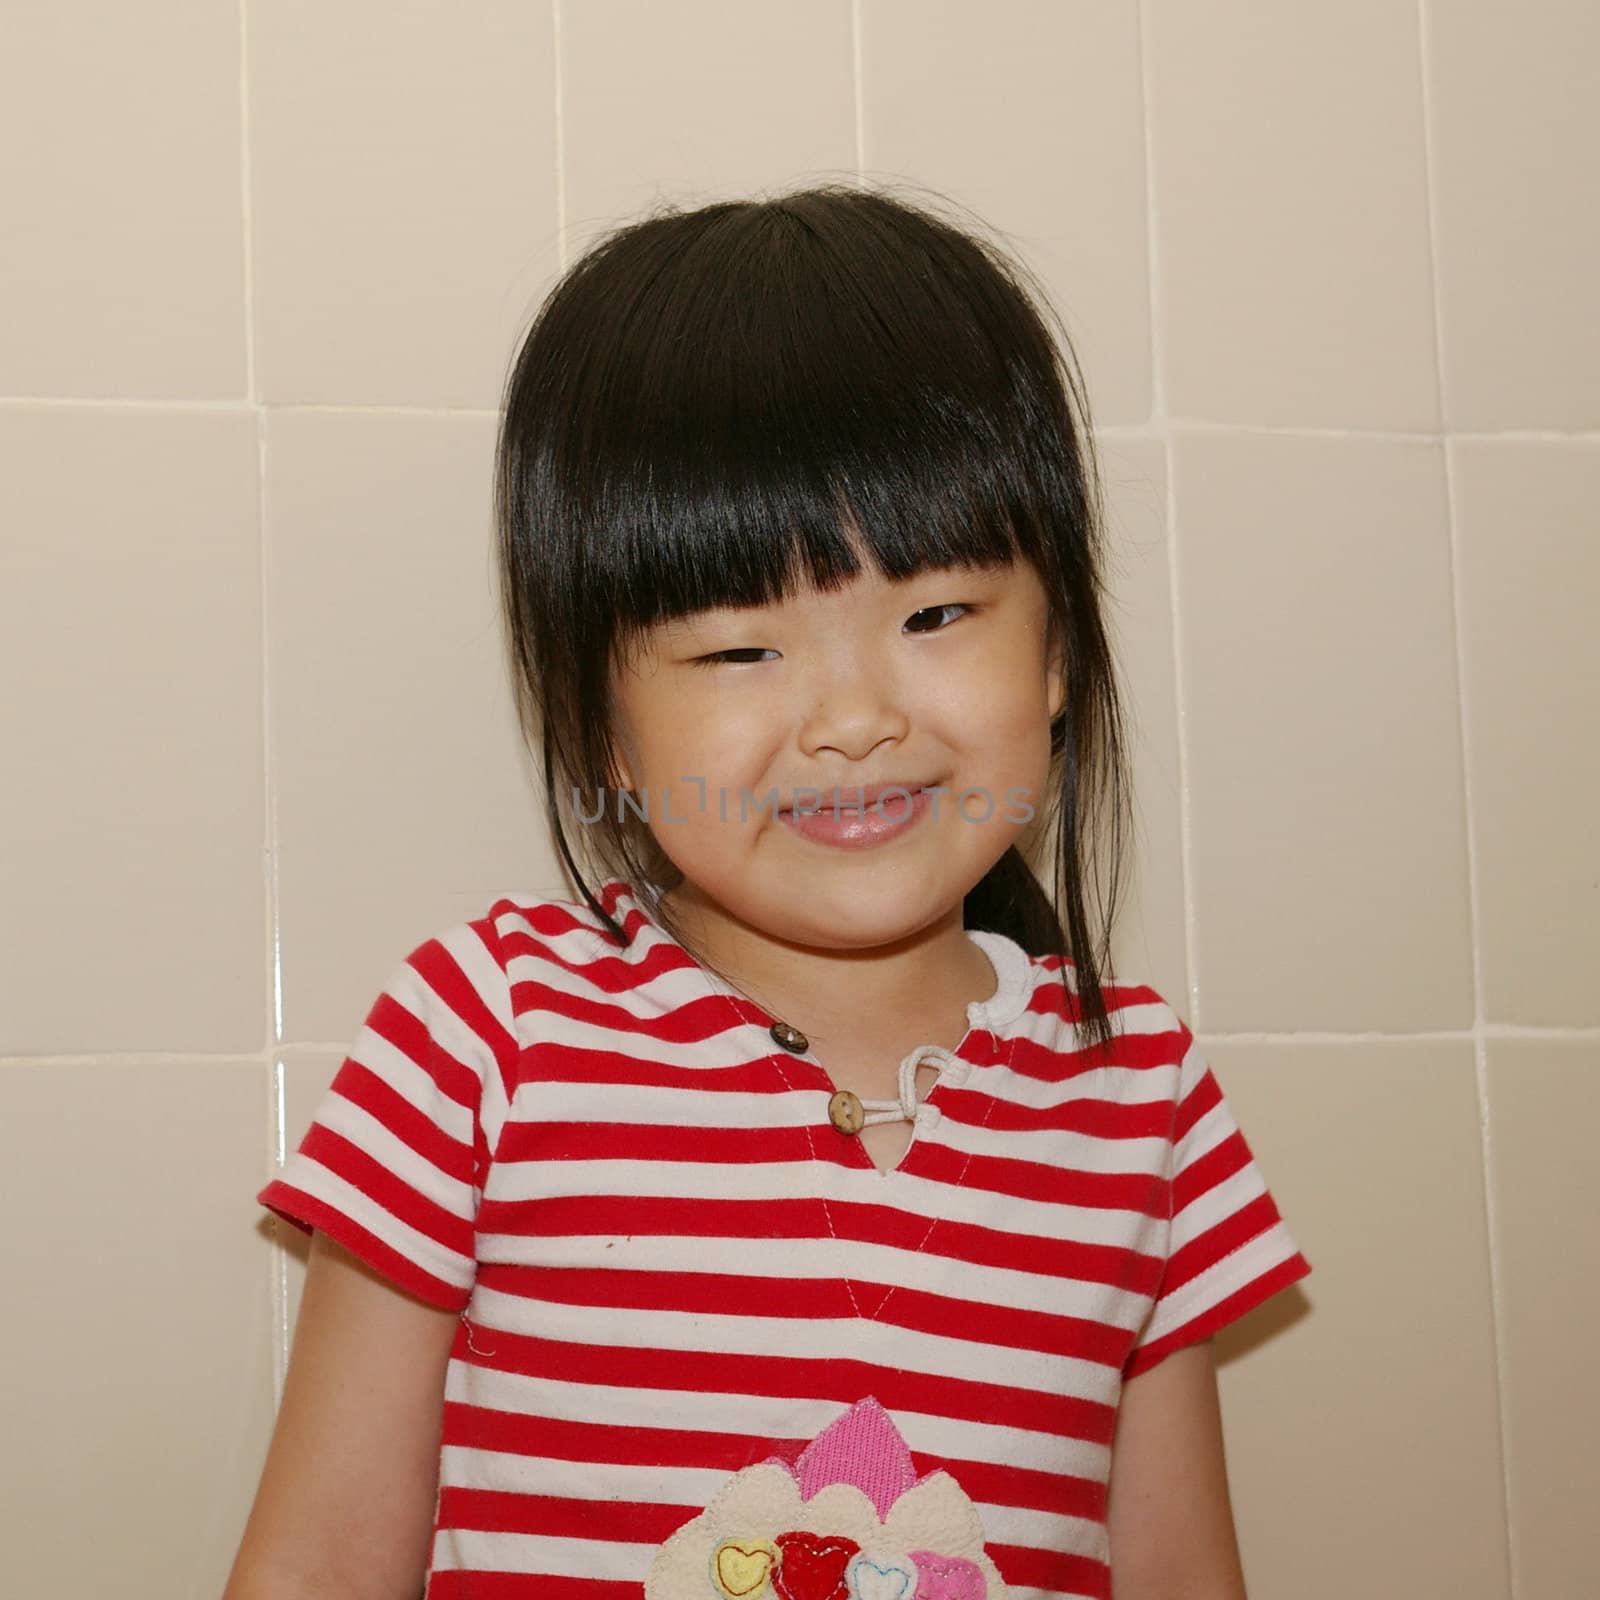 Smiling chinese girl